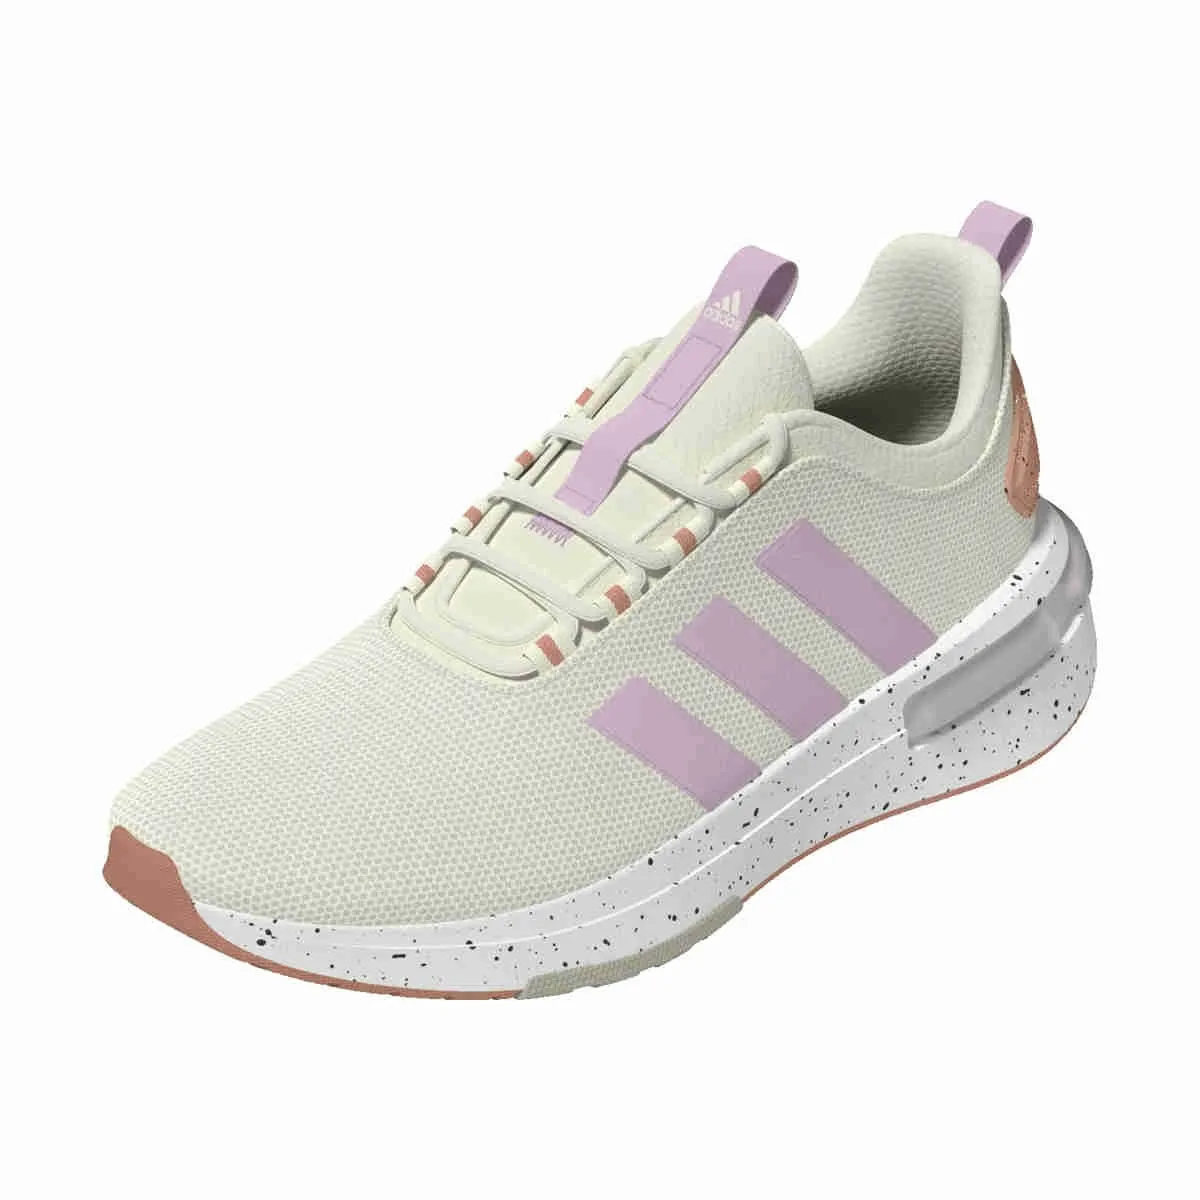 adidas Racer damessportschoen wit/roze